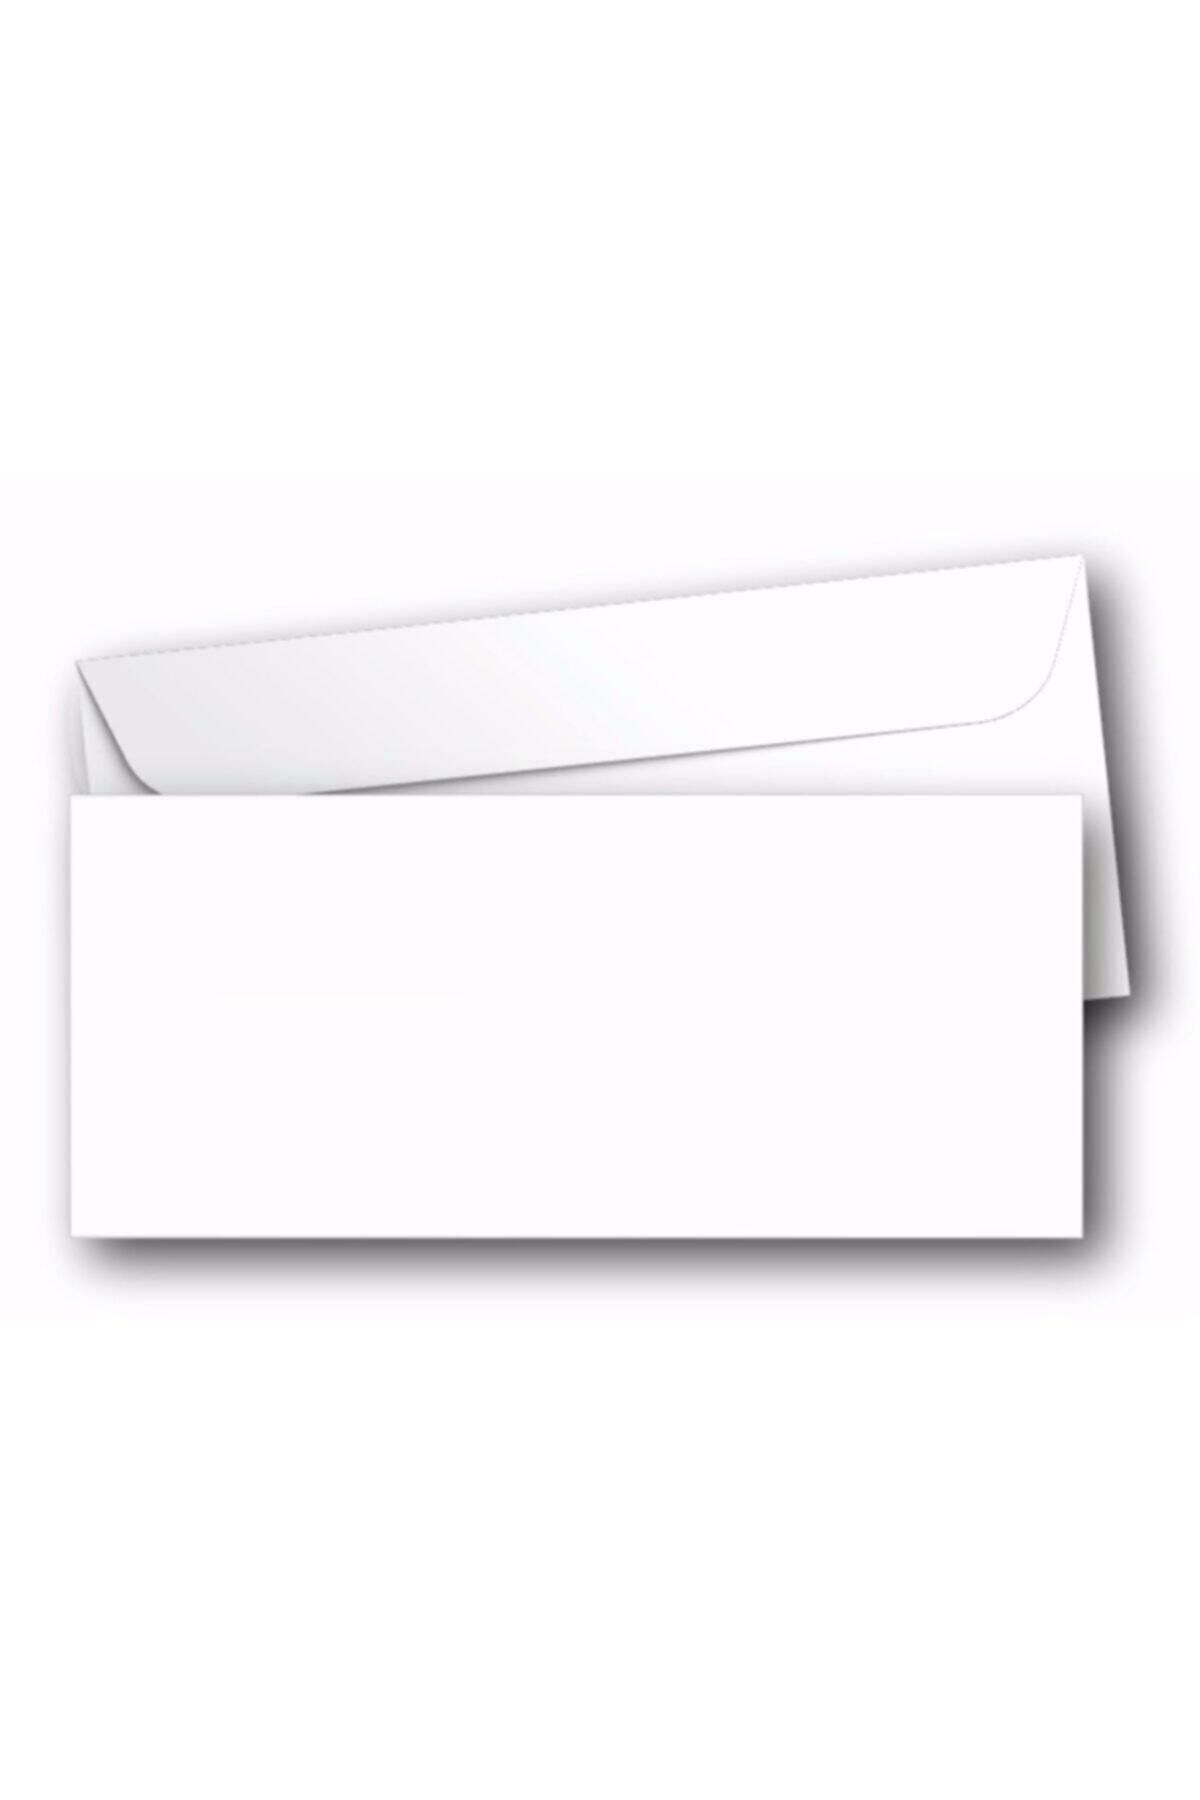 Diplomat Beyaz Zarf 100'lü 105x240 - 110 Gr